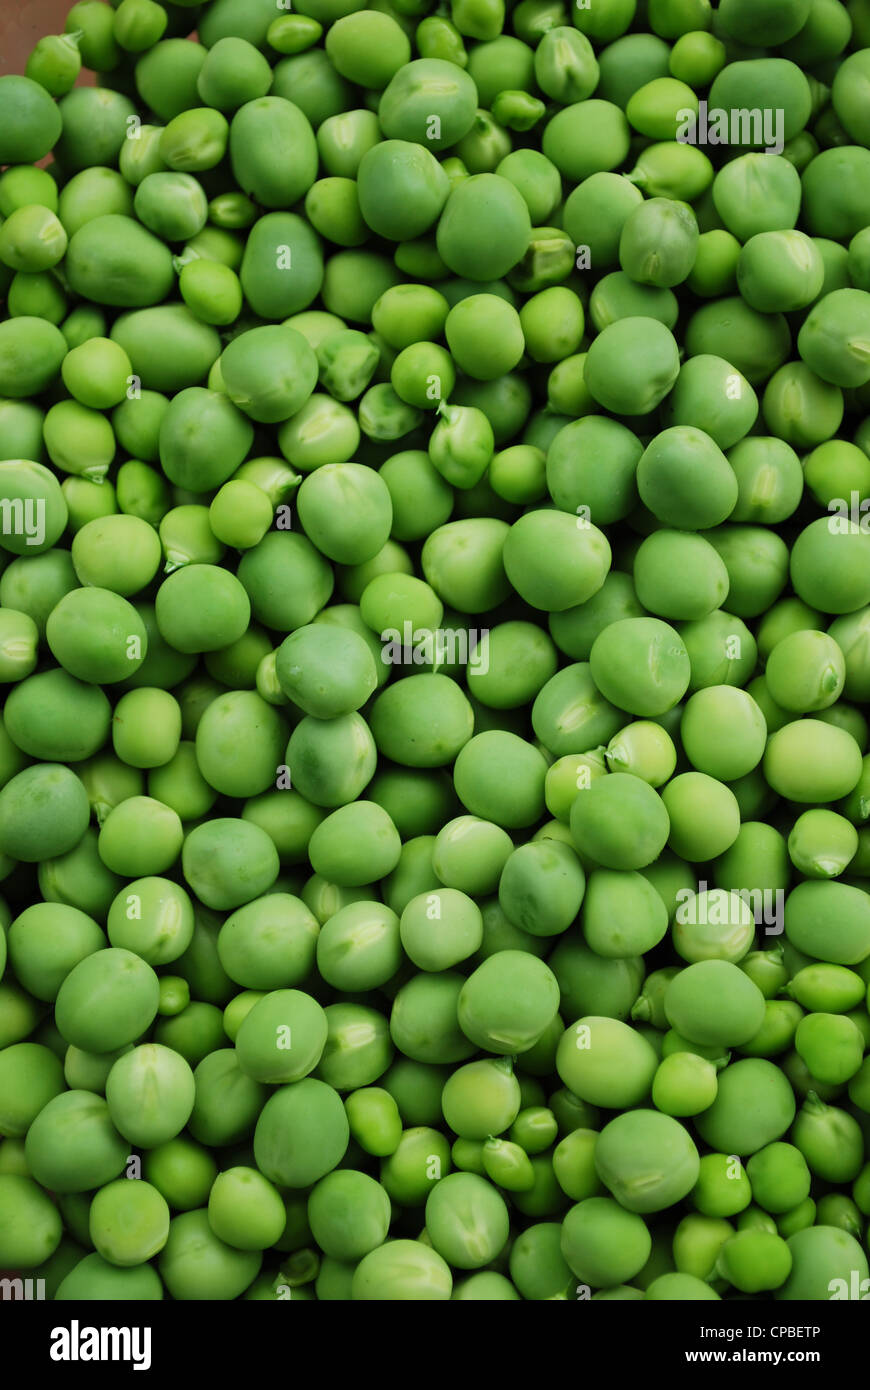 Shelled fresh ripe sweet green peas background Stock Photo